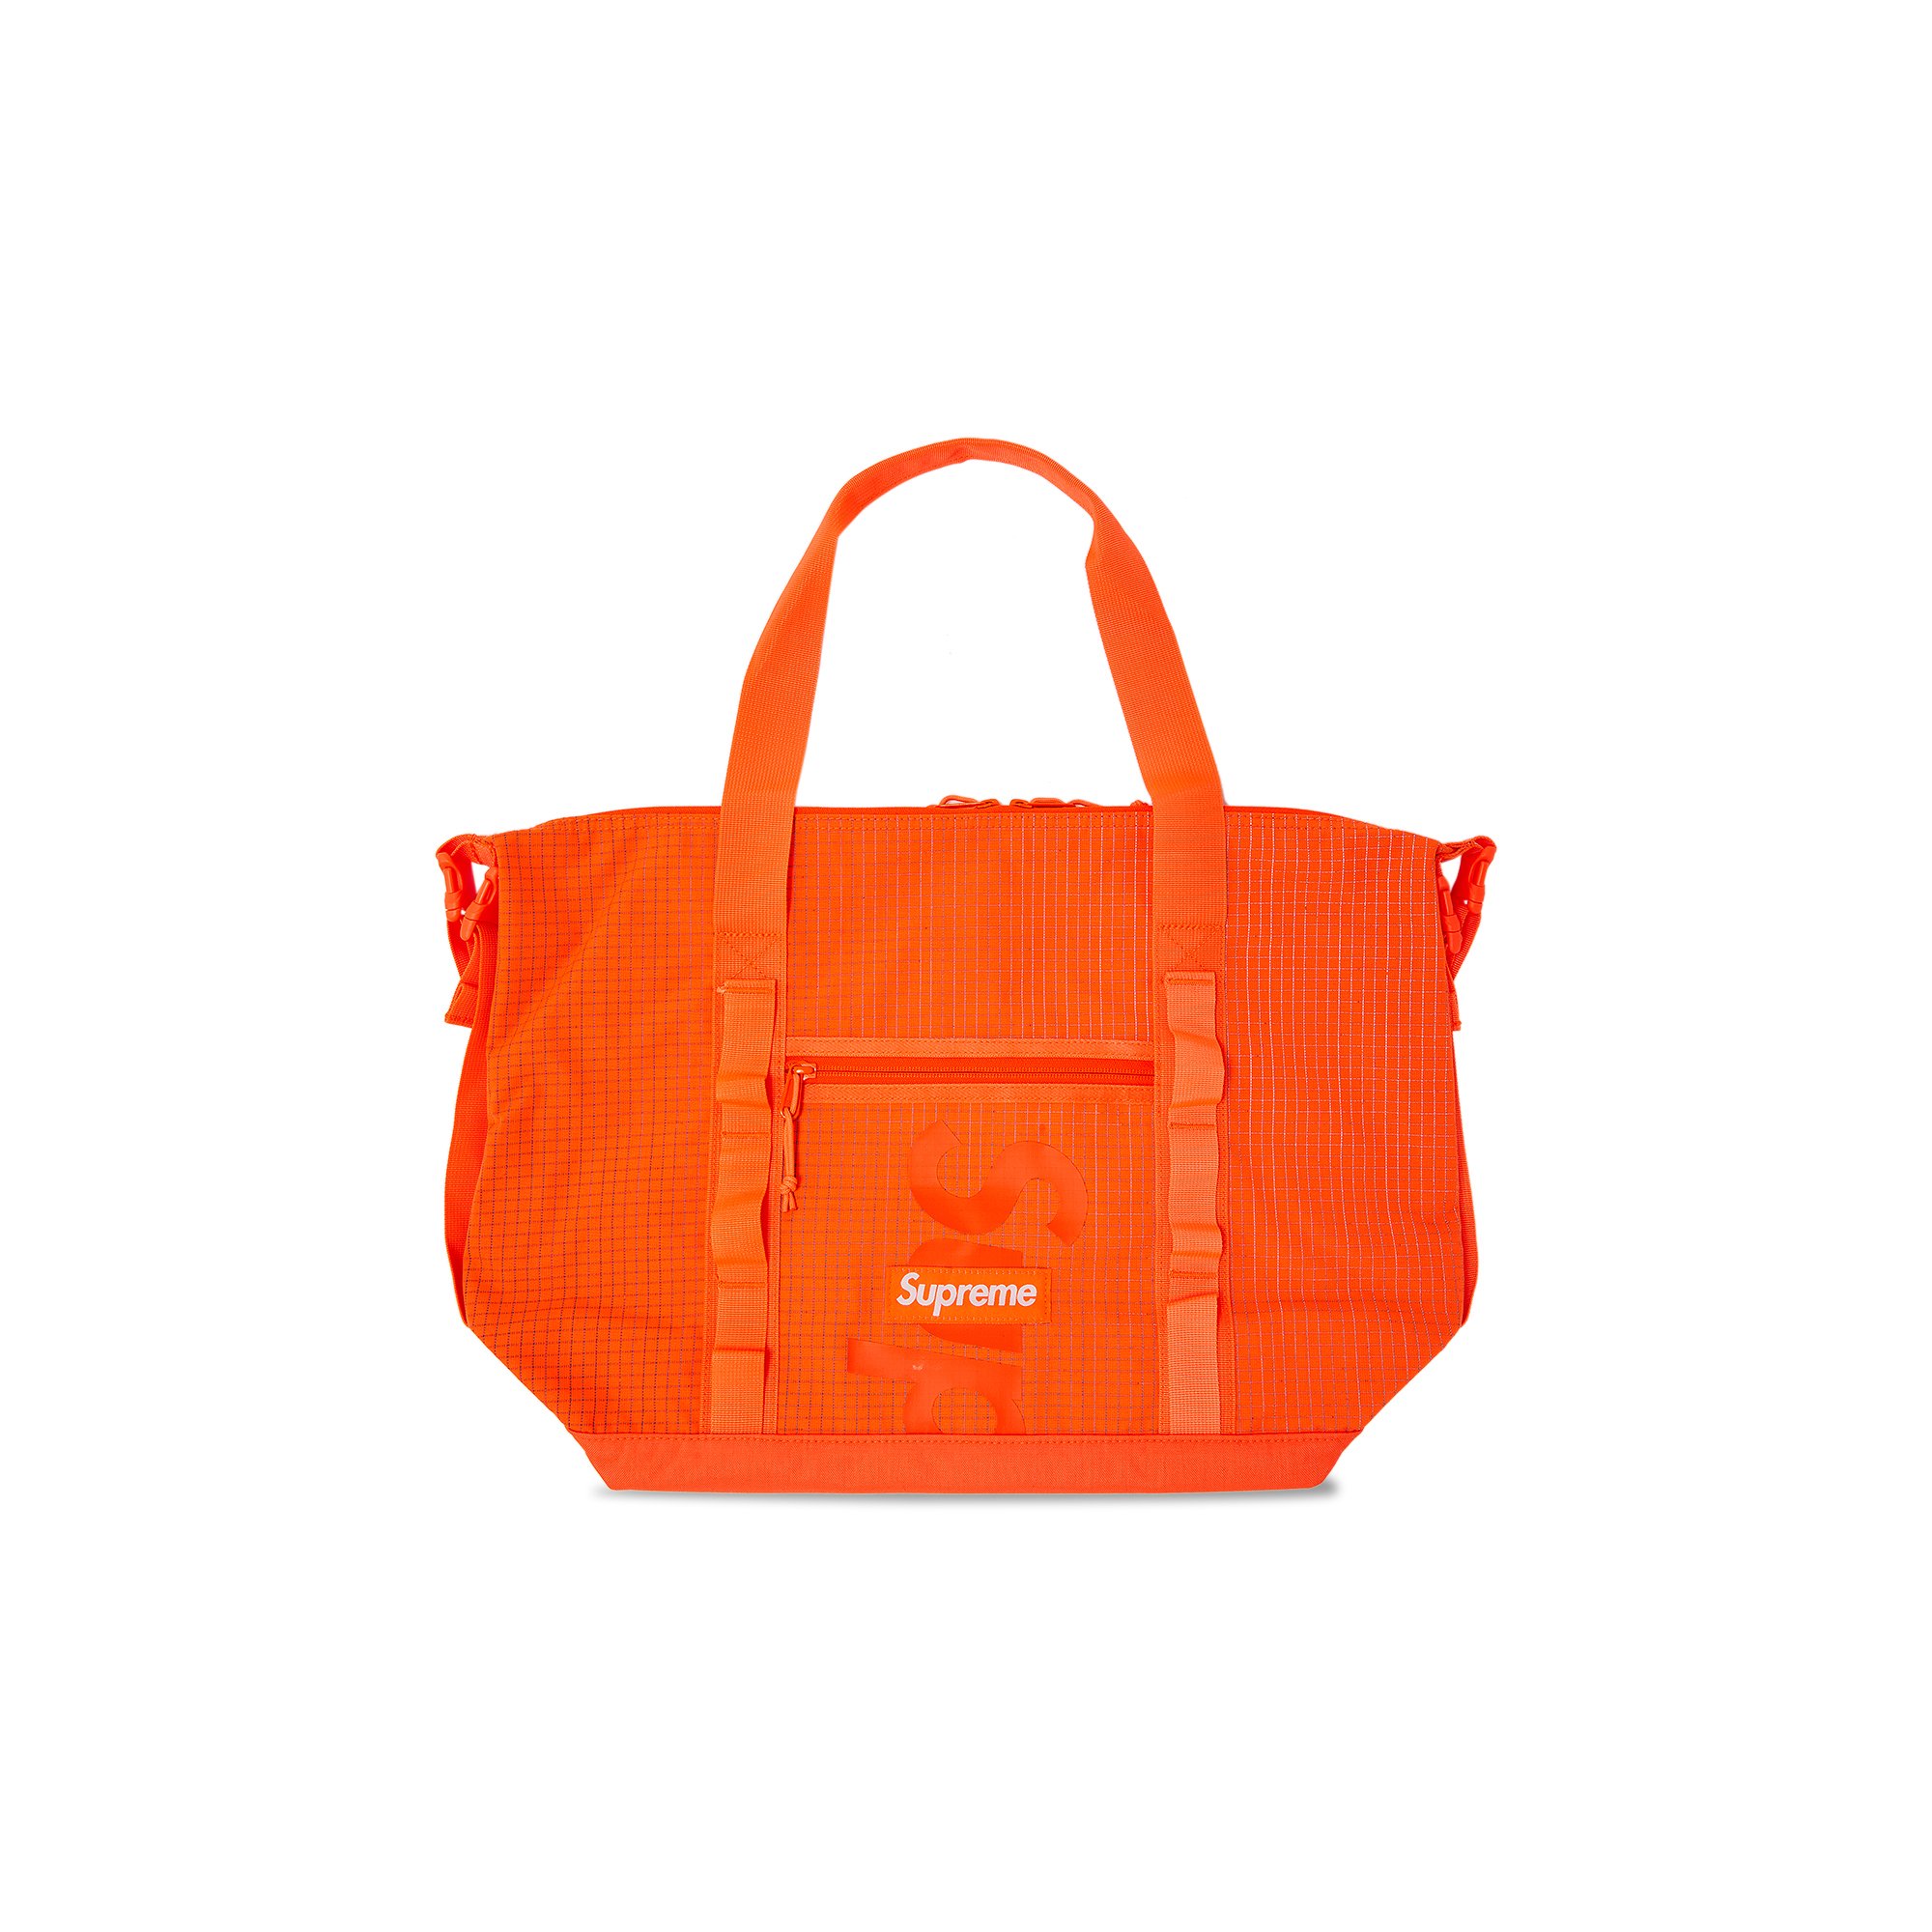 Supreme Tote Bag 'Orange'